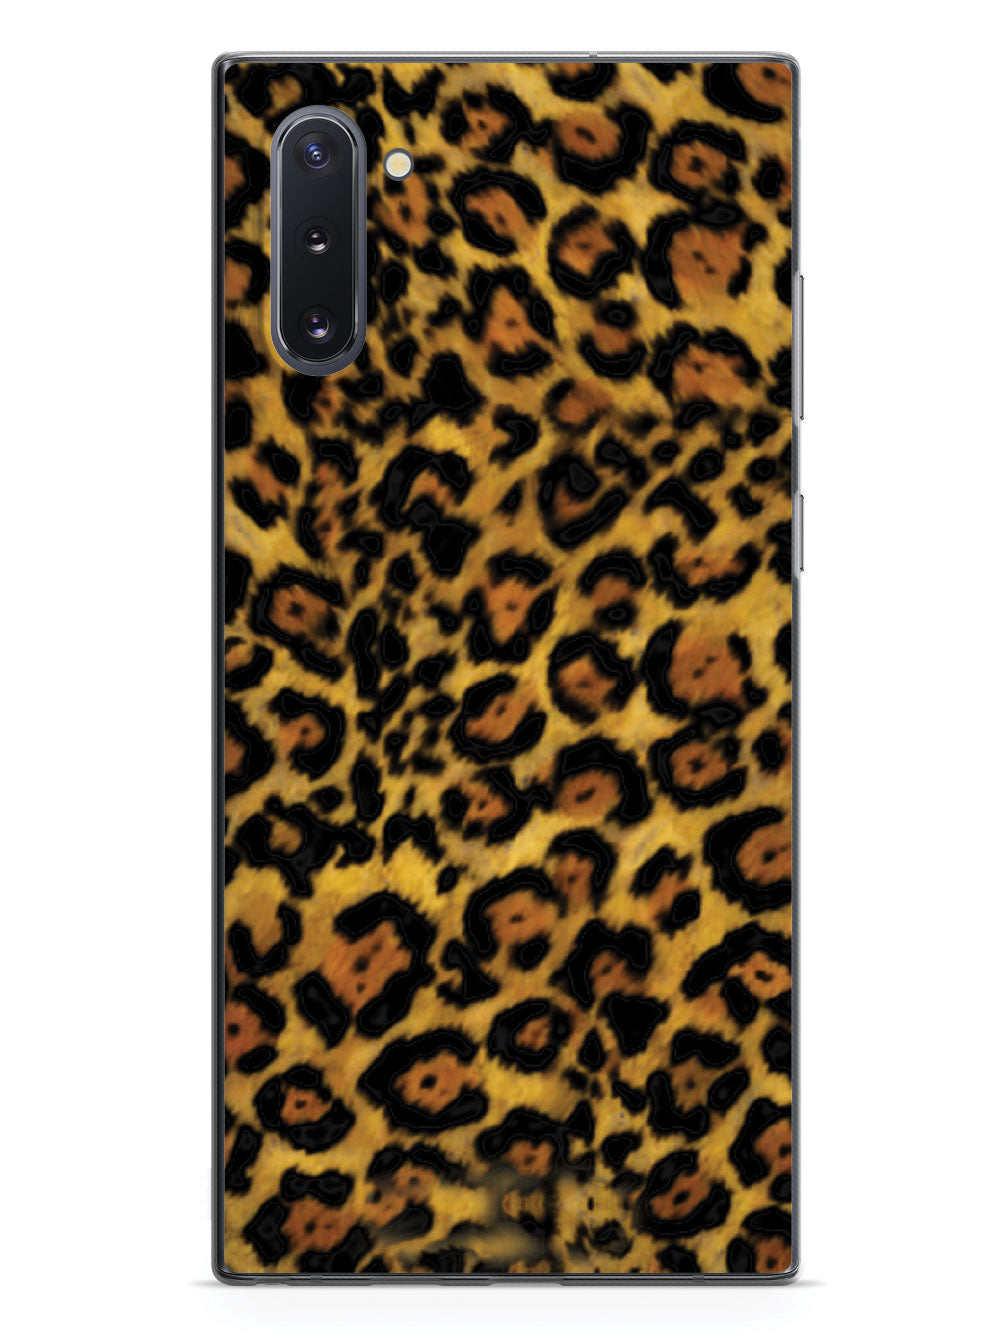 Leopard Animal Print Pattern Case